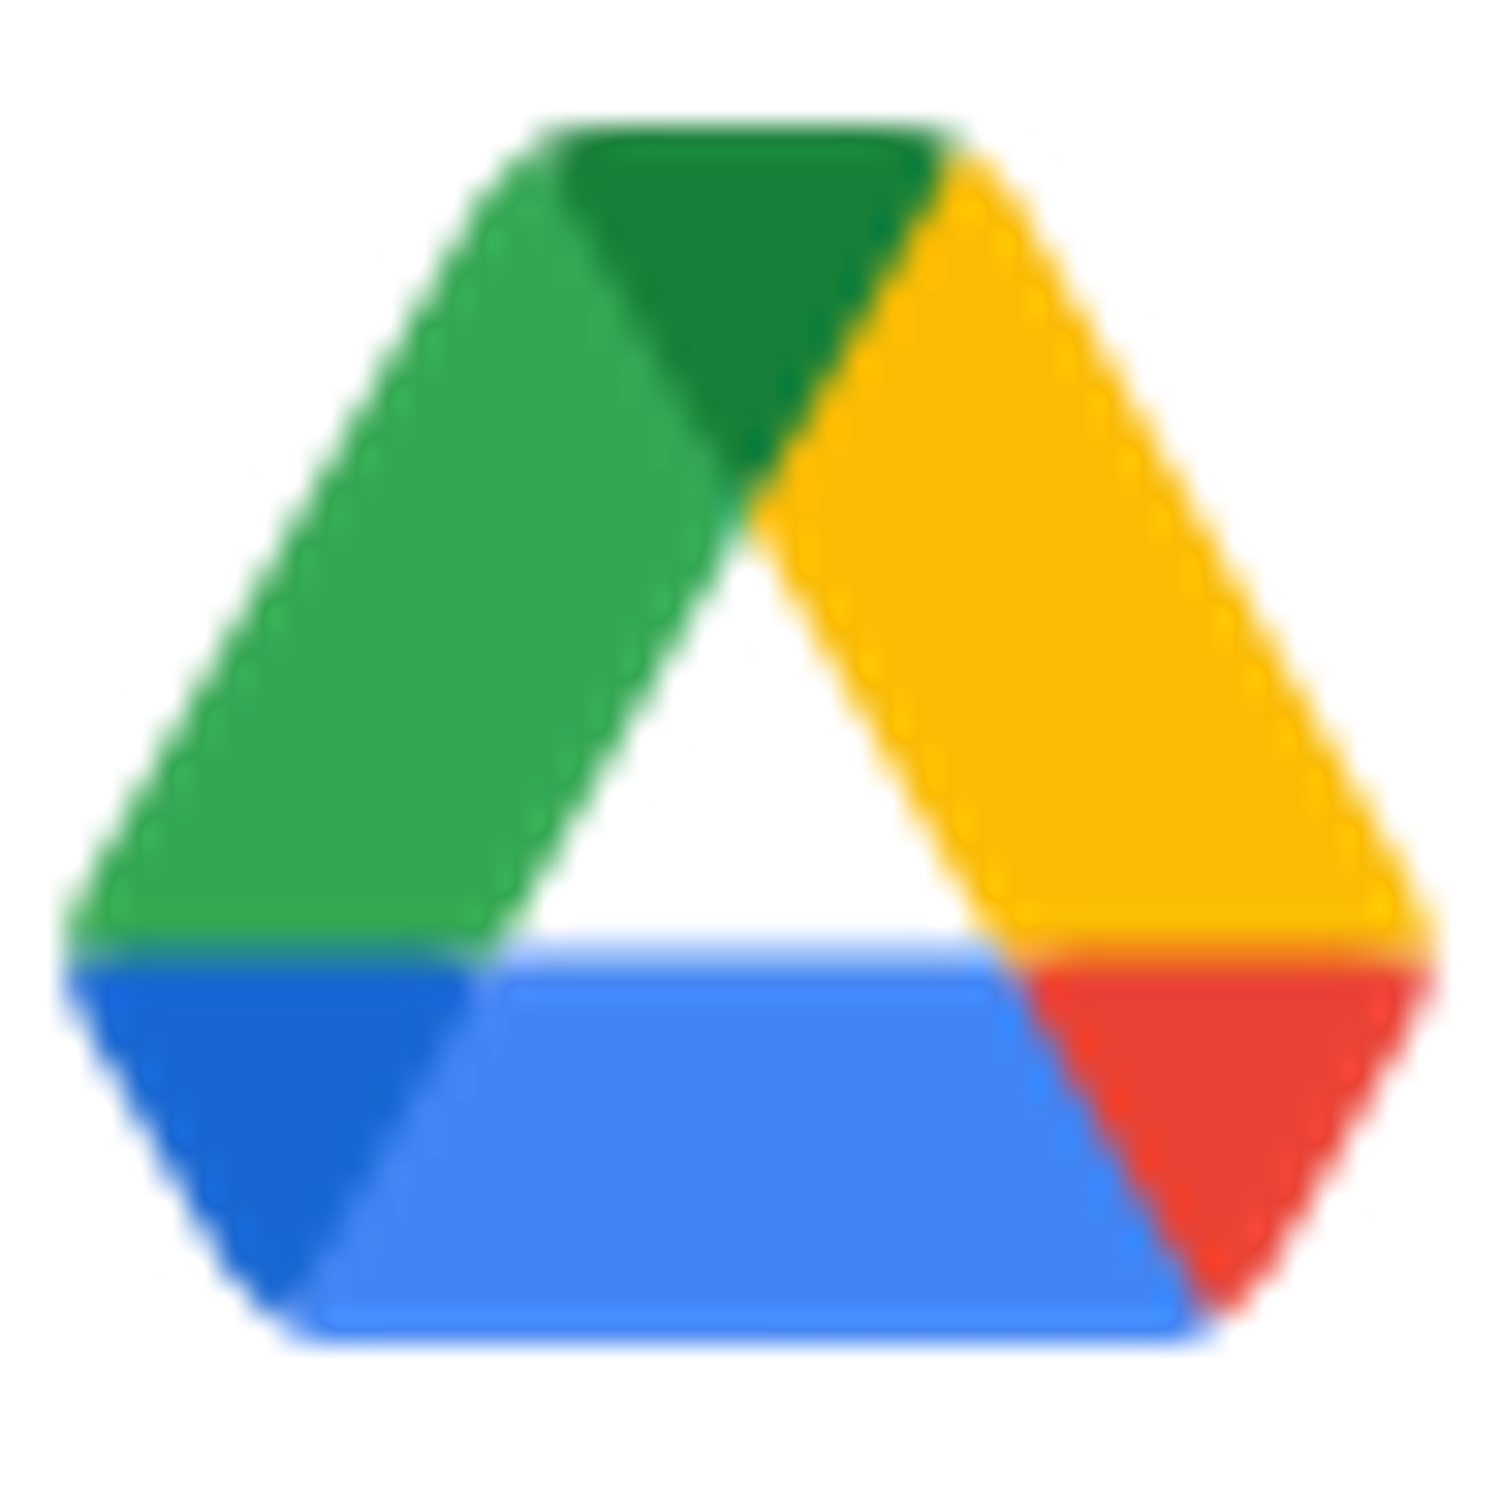 UX Design (Complete Pack) - Google Drive